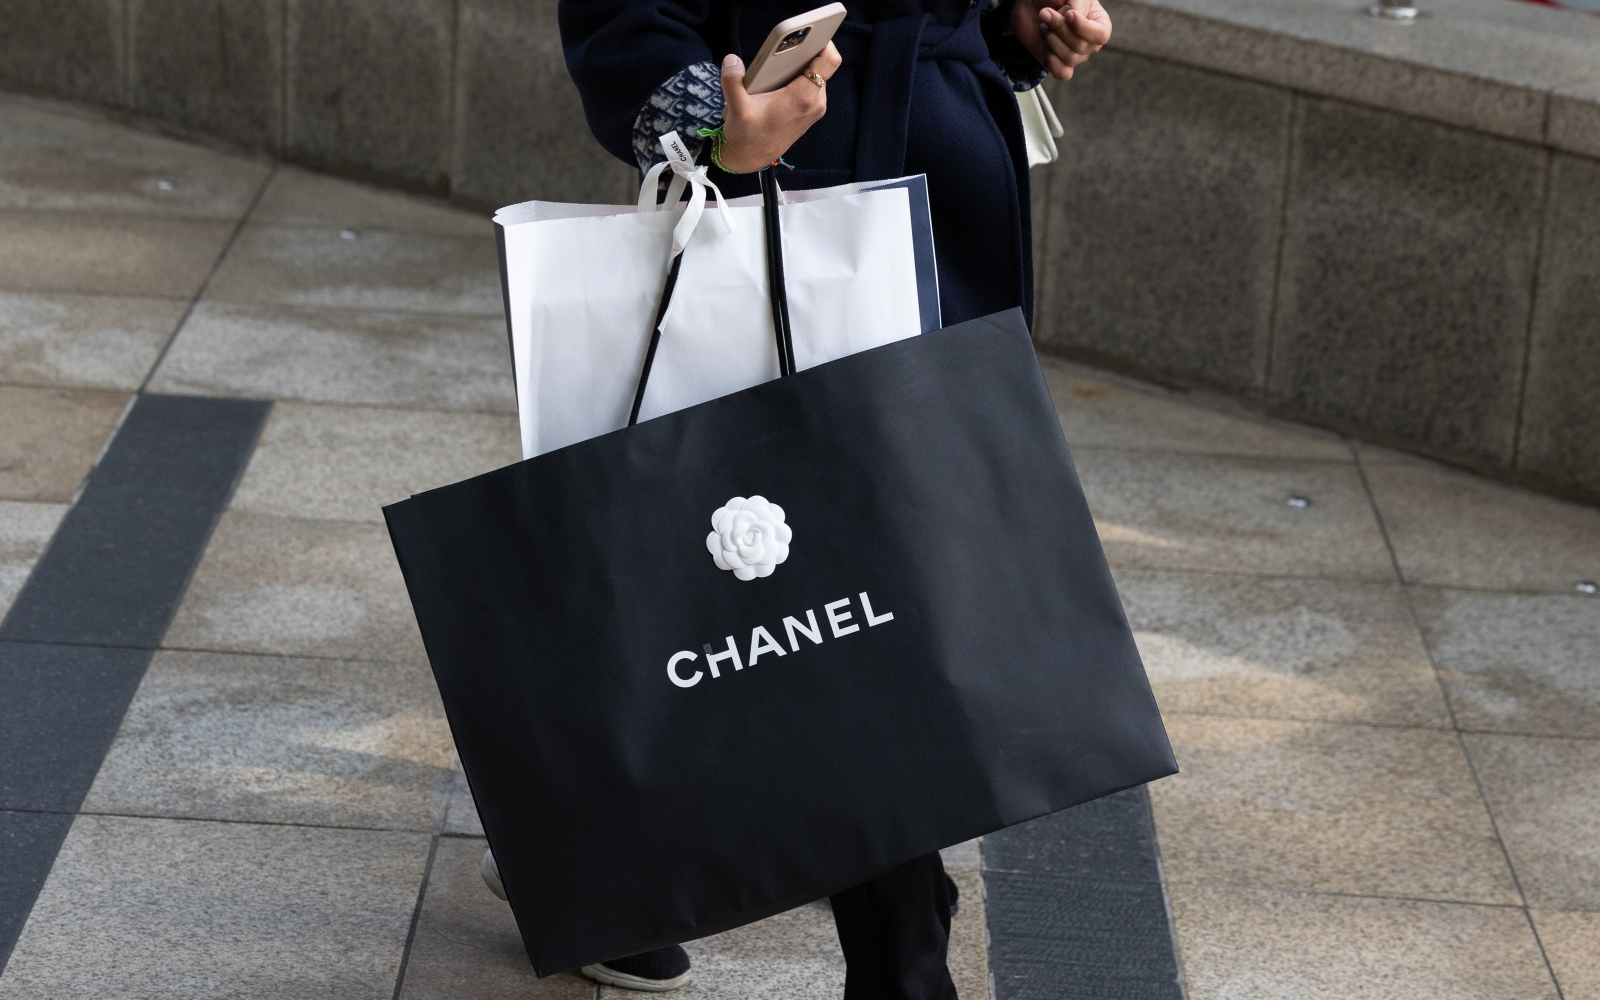 Shop Chanel Paper Bag online